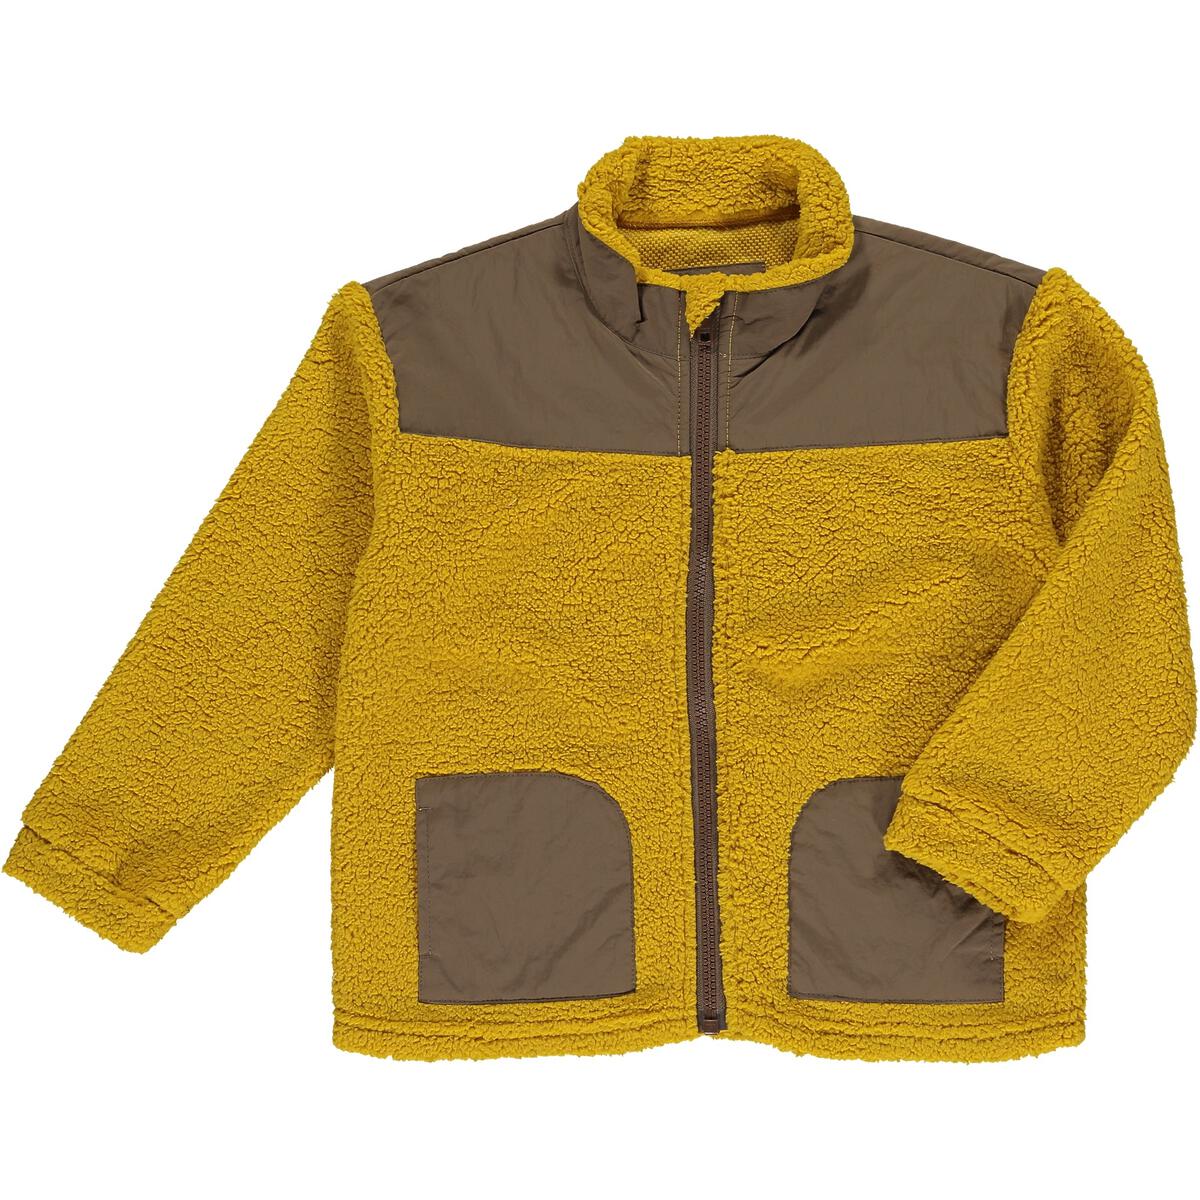 Sherpa Jacket - Gold/Brown